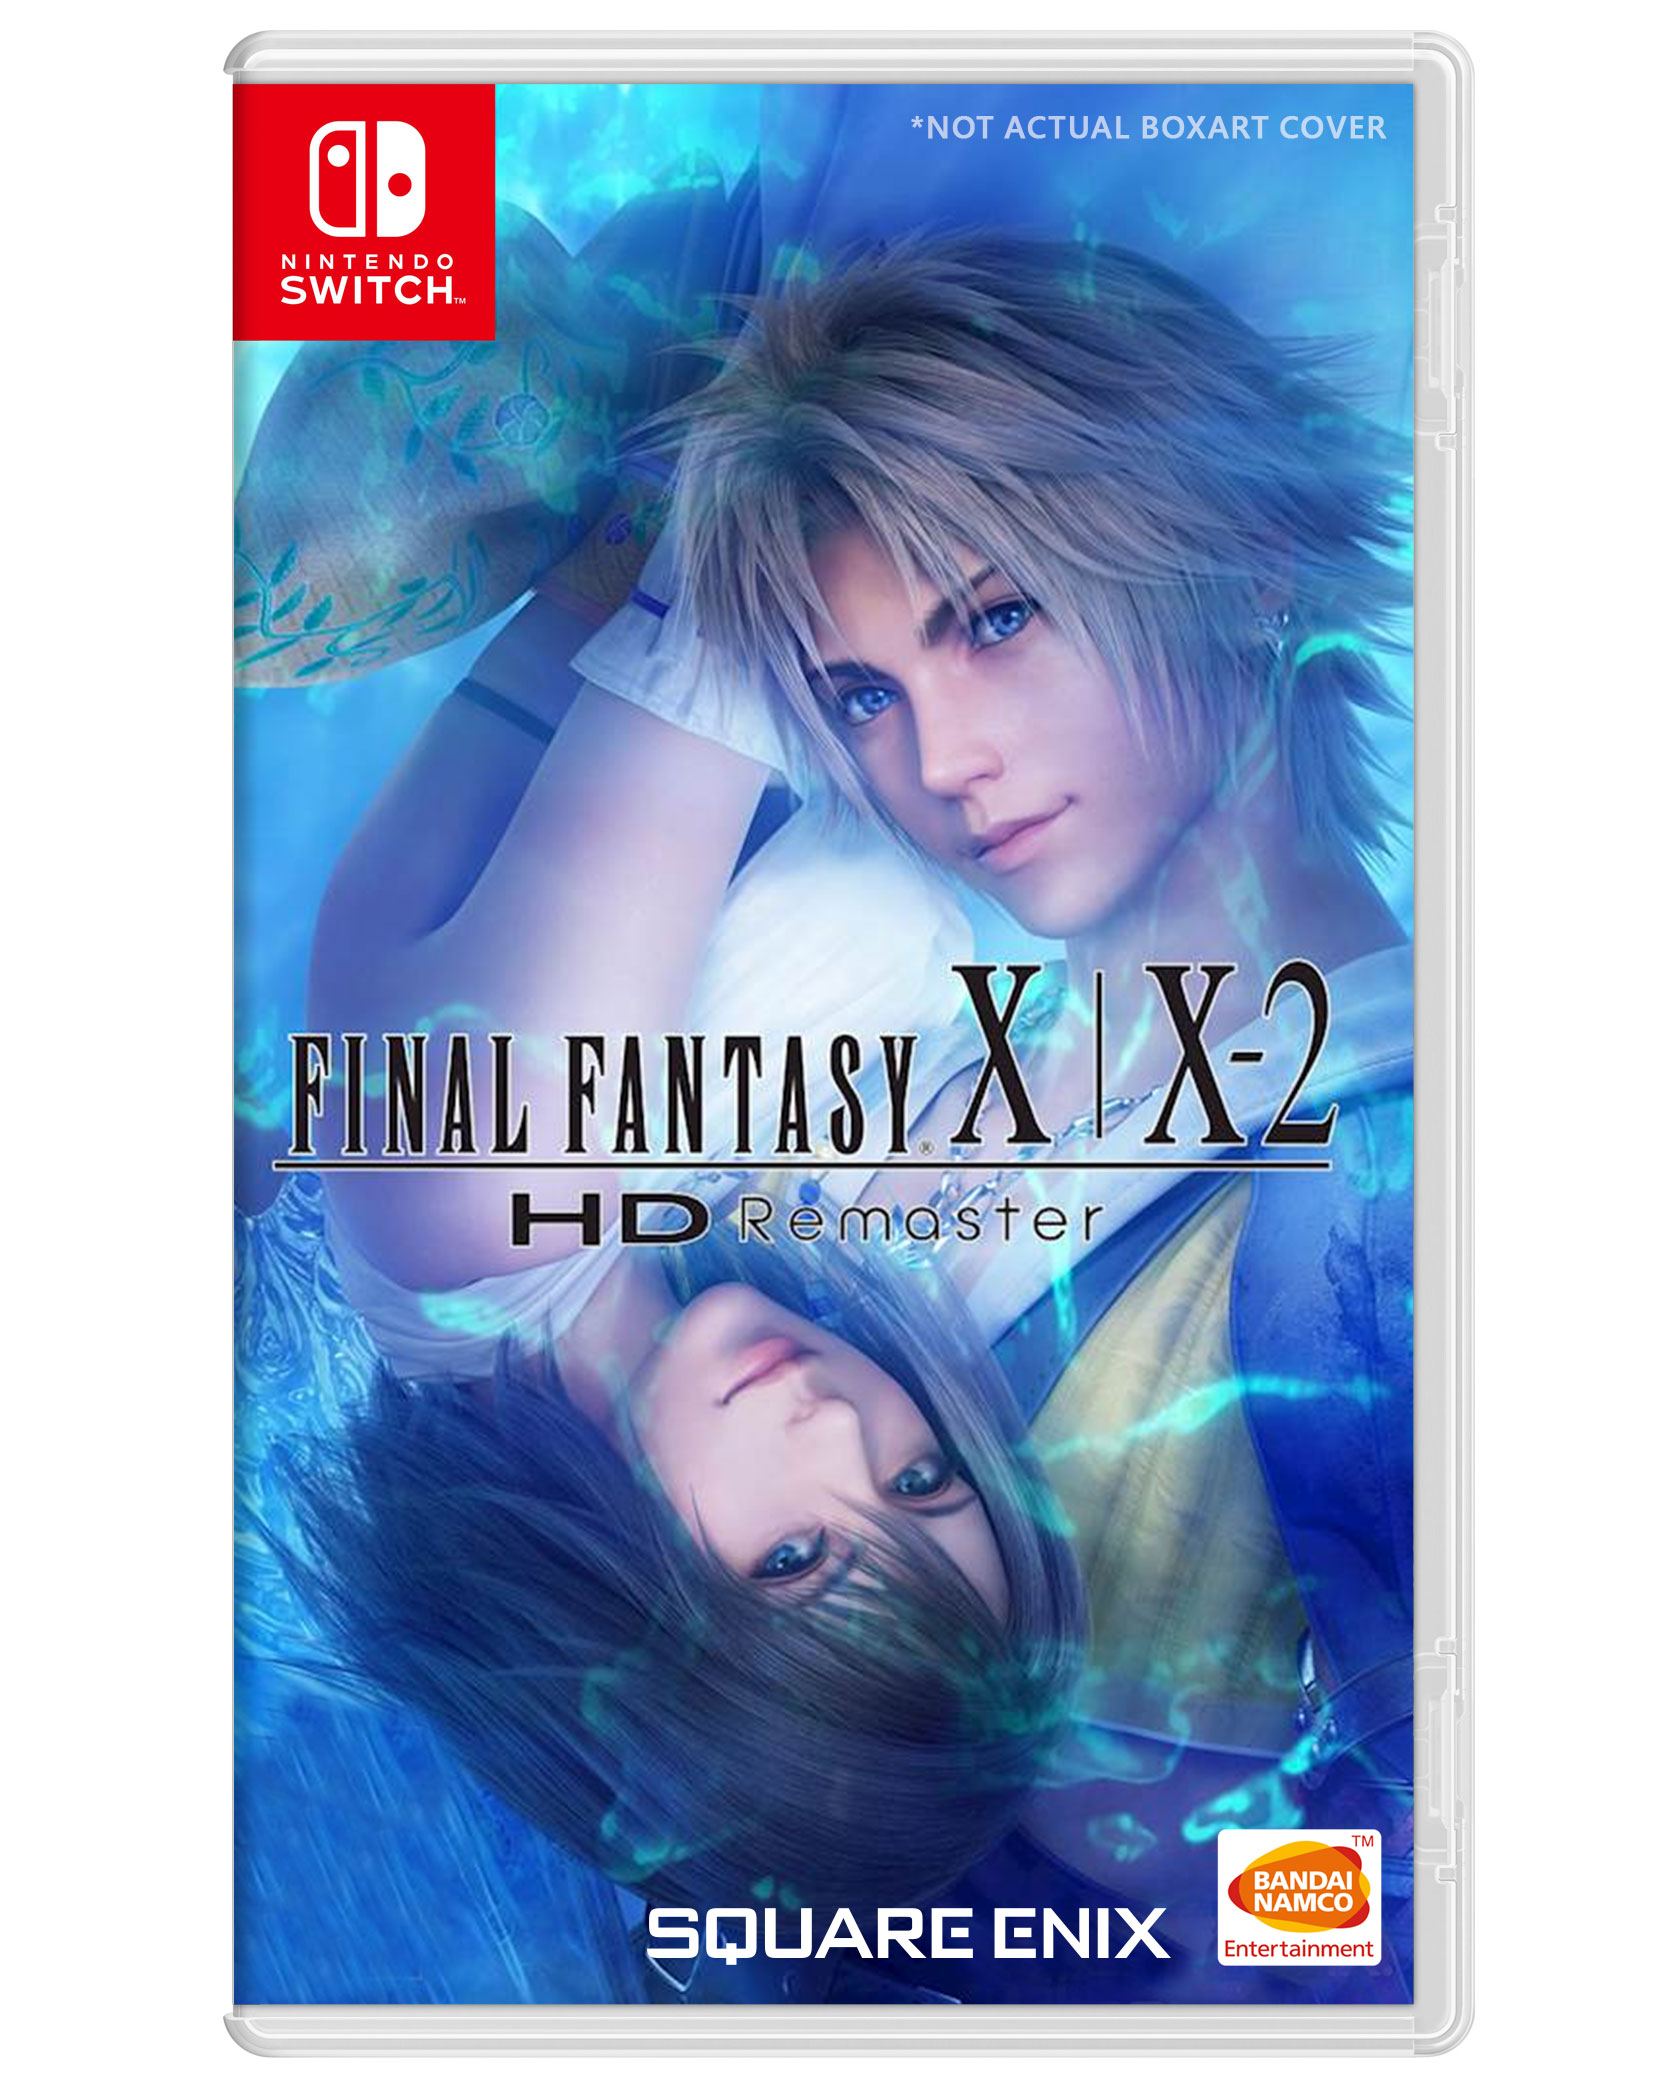 Final Fantasy Vii Final Fantasy Viii Remastered Twin Pack Multi Language English Cover